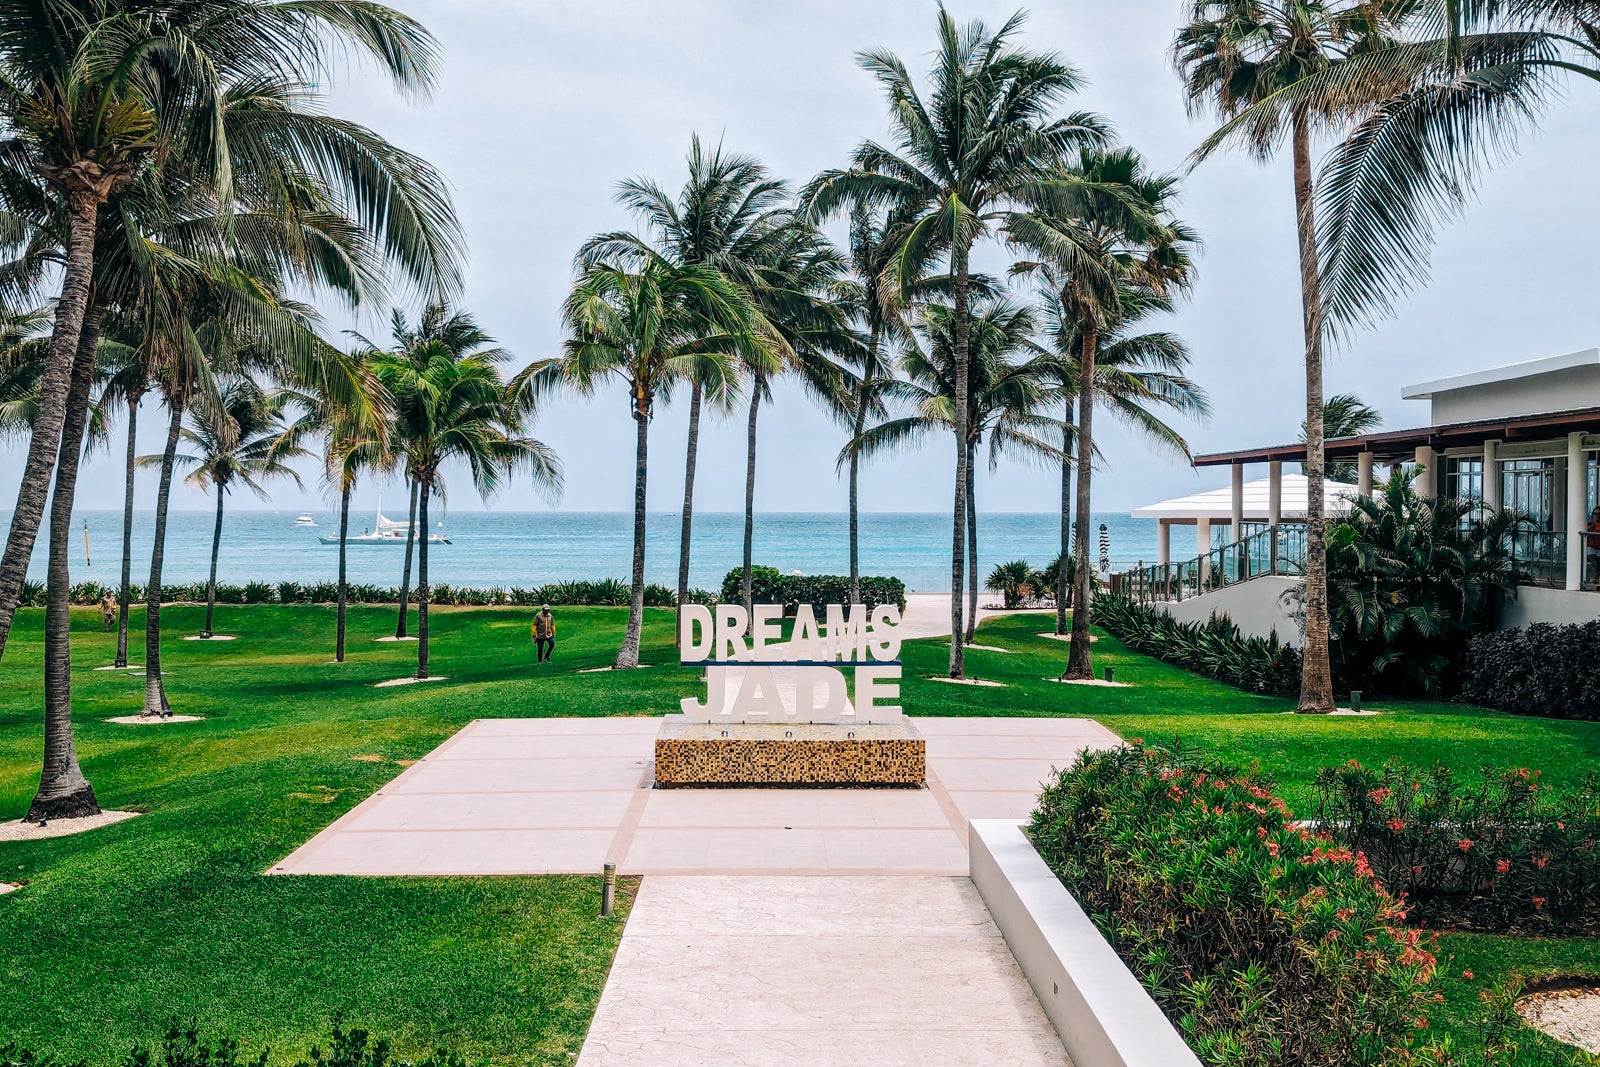 Dreams Jade resort